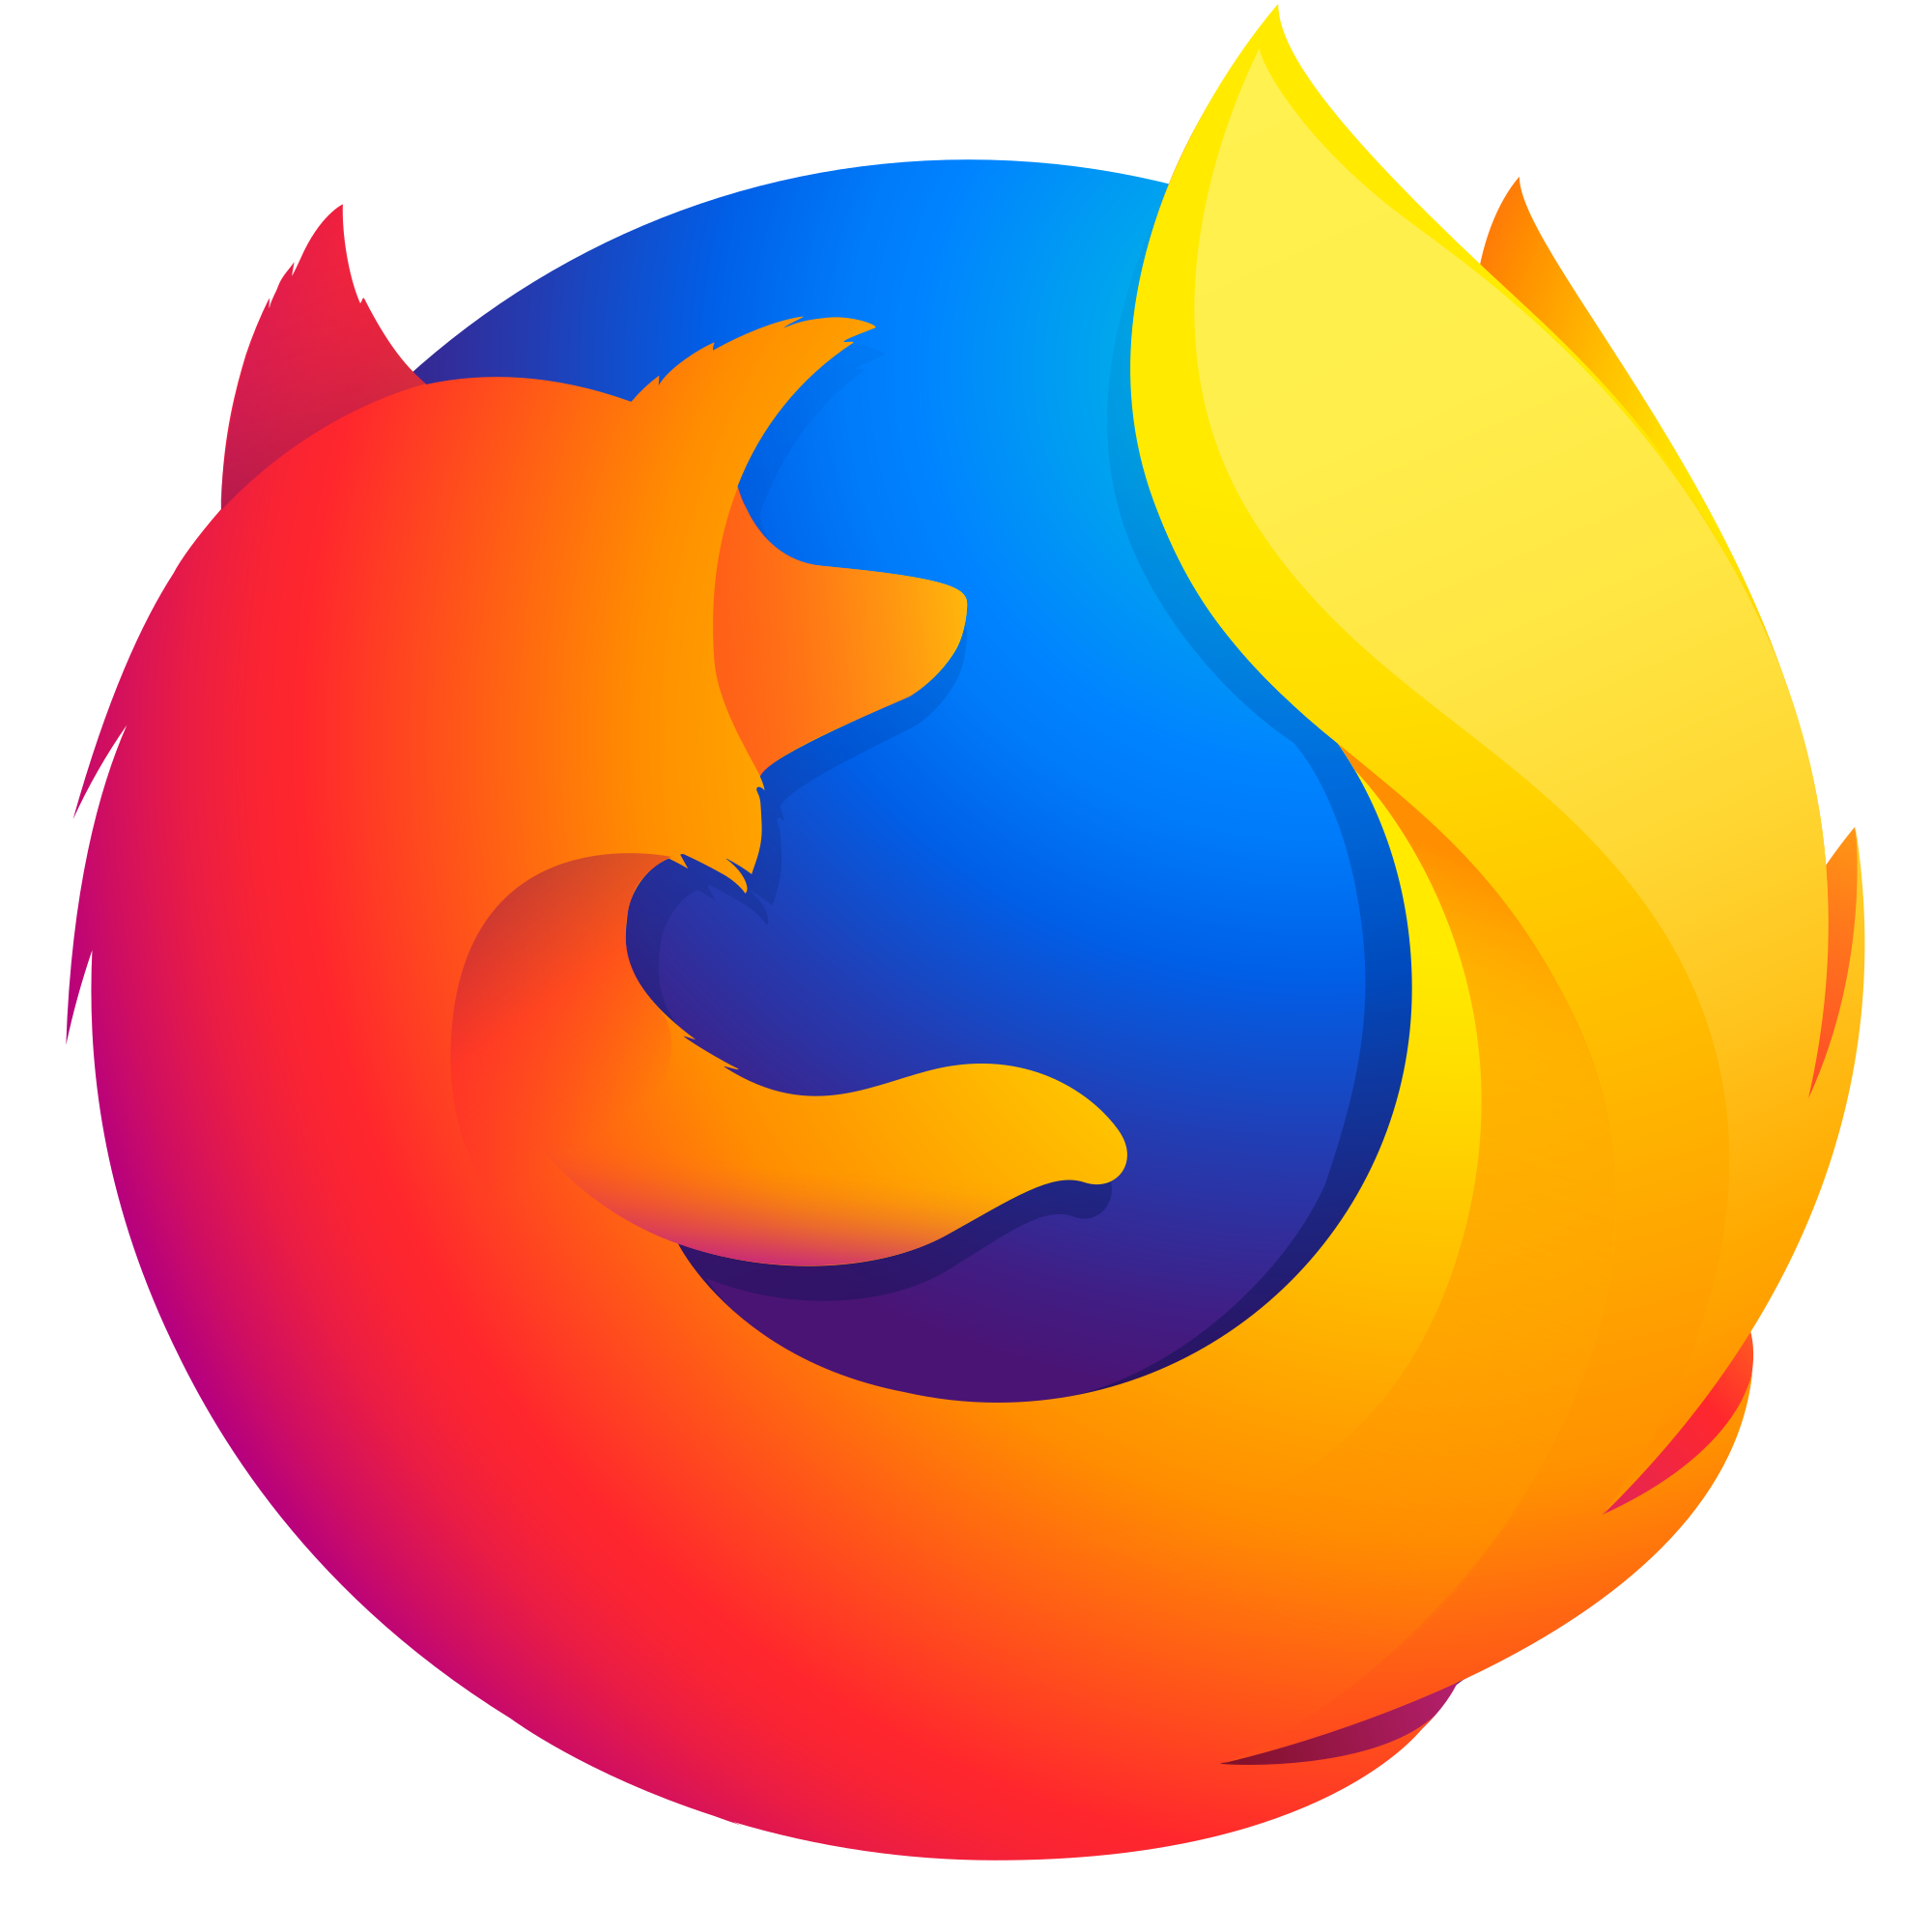 Publishing Reflections on Common Core Using Mozilla Webmaker